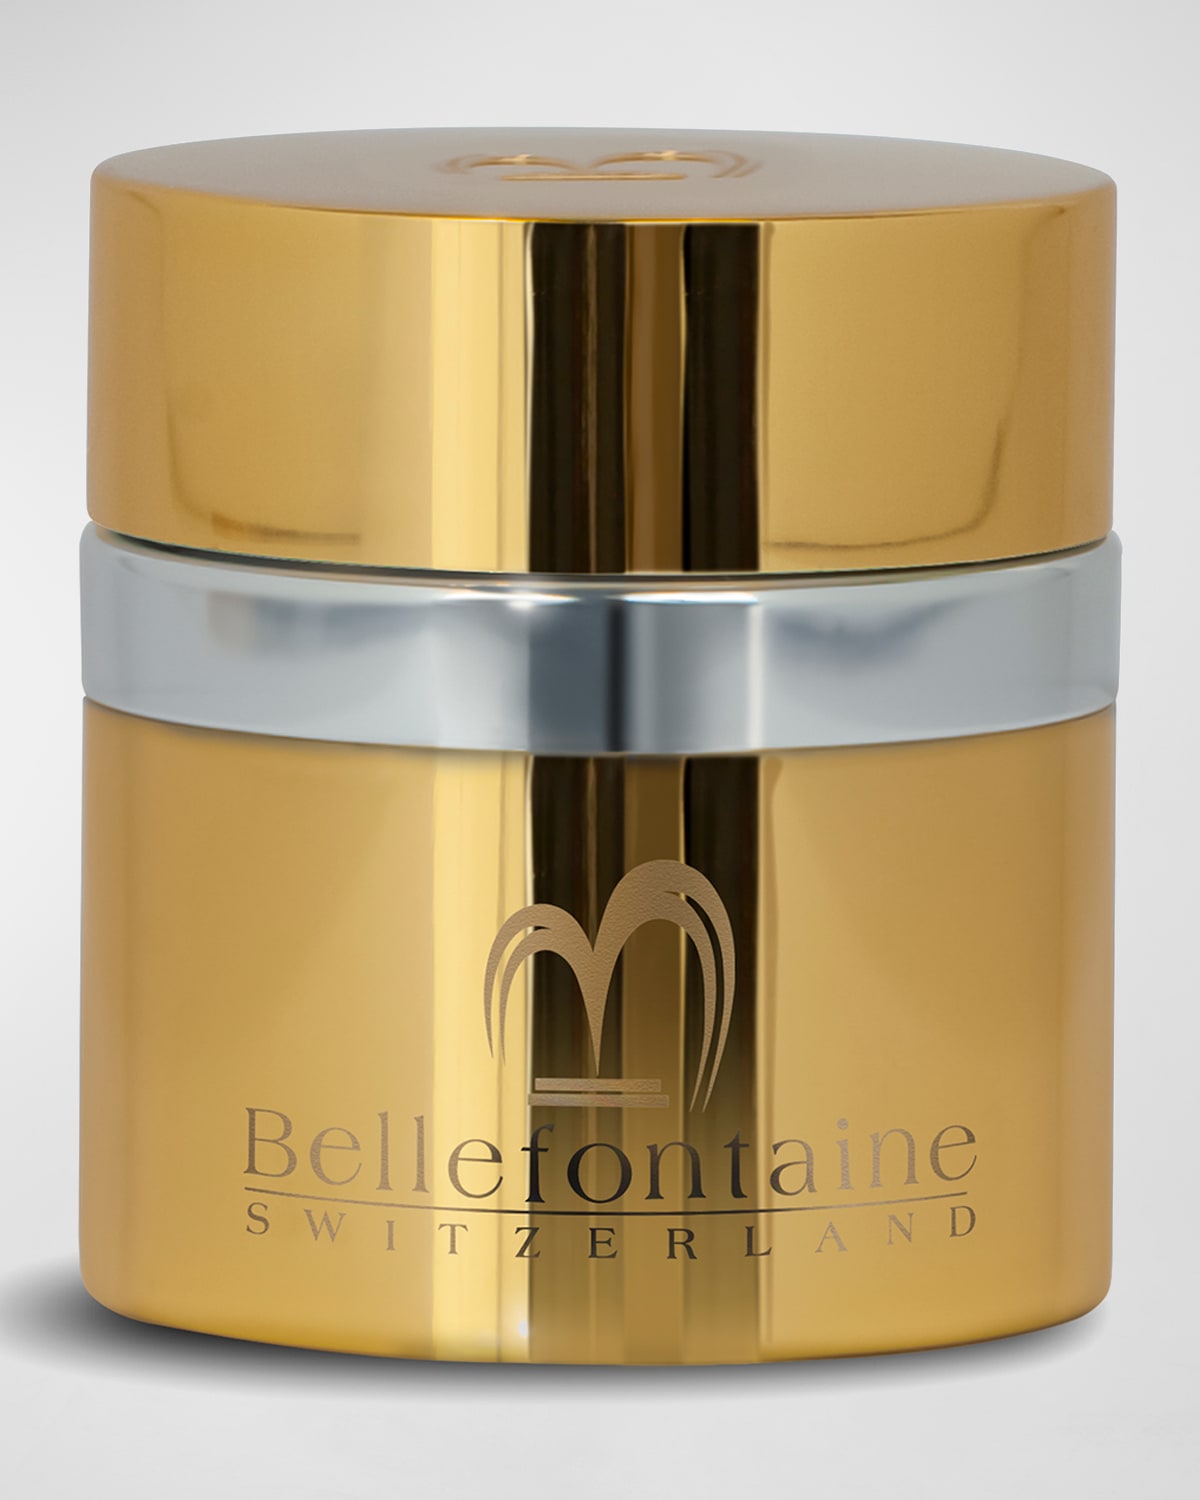 Bellefontaine Cellstemine 24h Repair Cream To Replenish